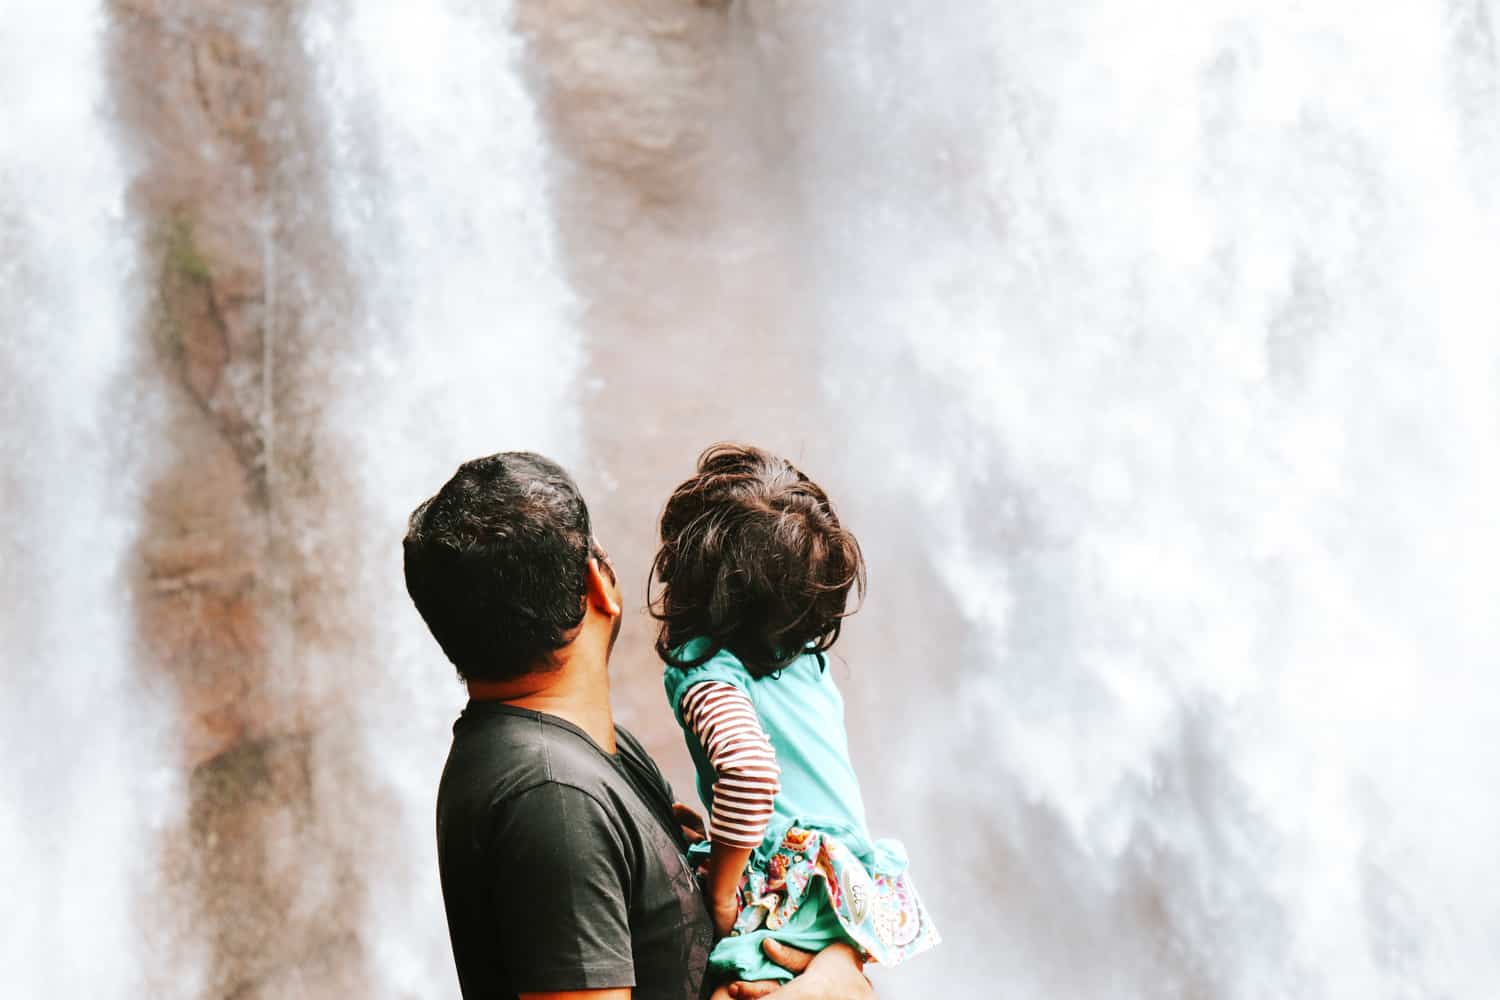 Ramboda waterfall with a toddler